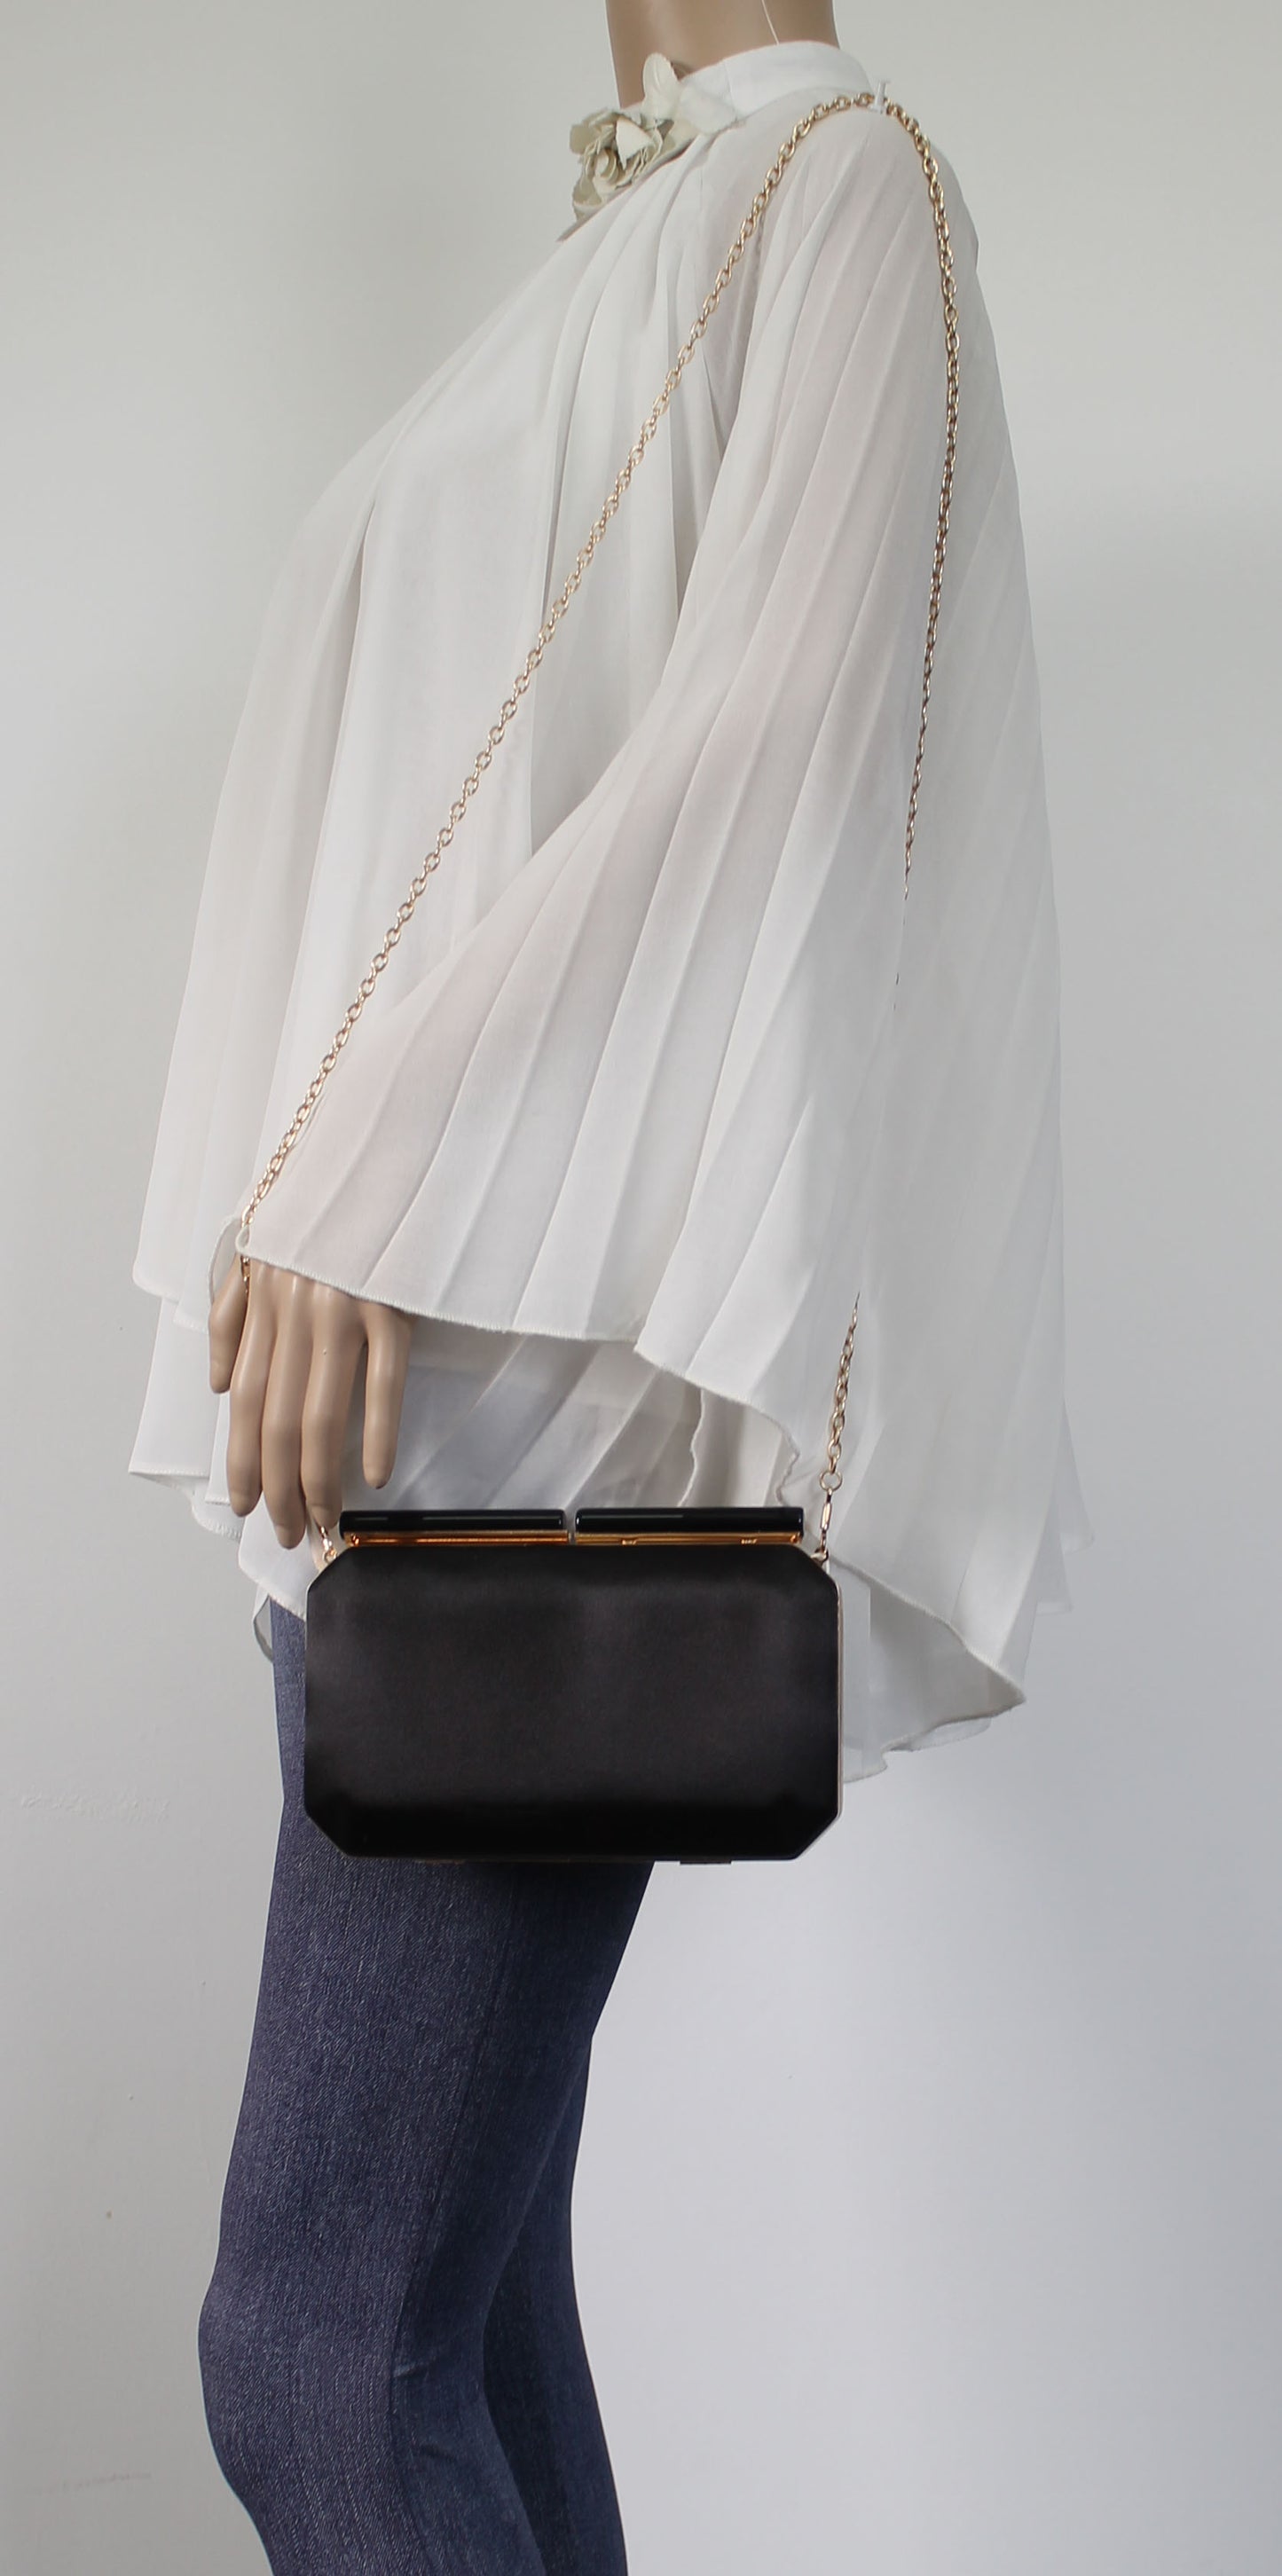 SWANKYSWANS Millie Clutch Bag Black Cute Cheap Clutch Bag For Weddings School and Work